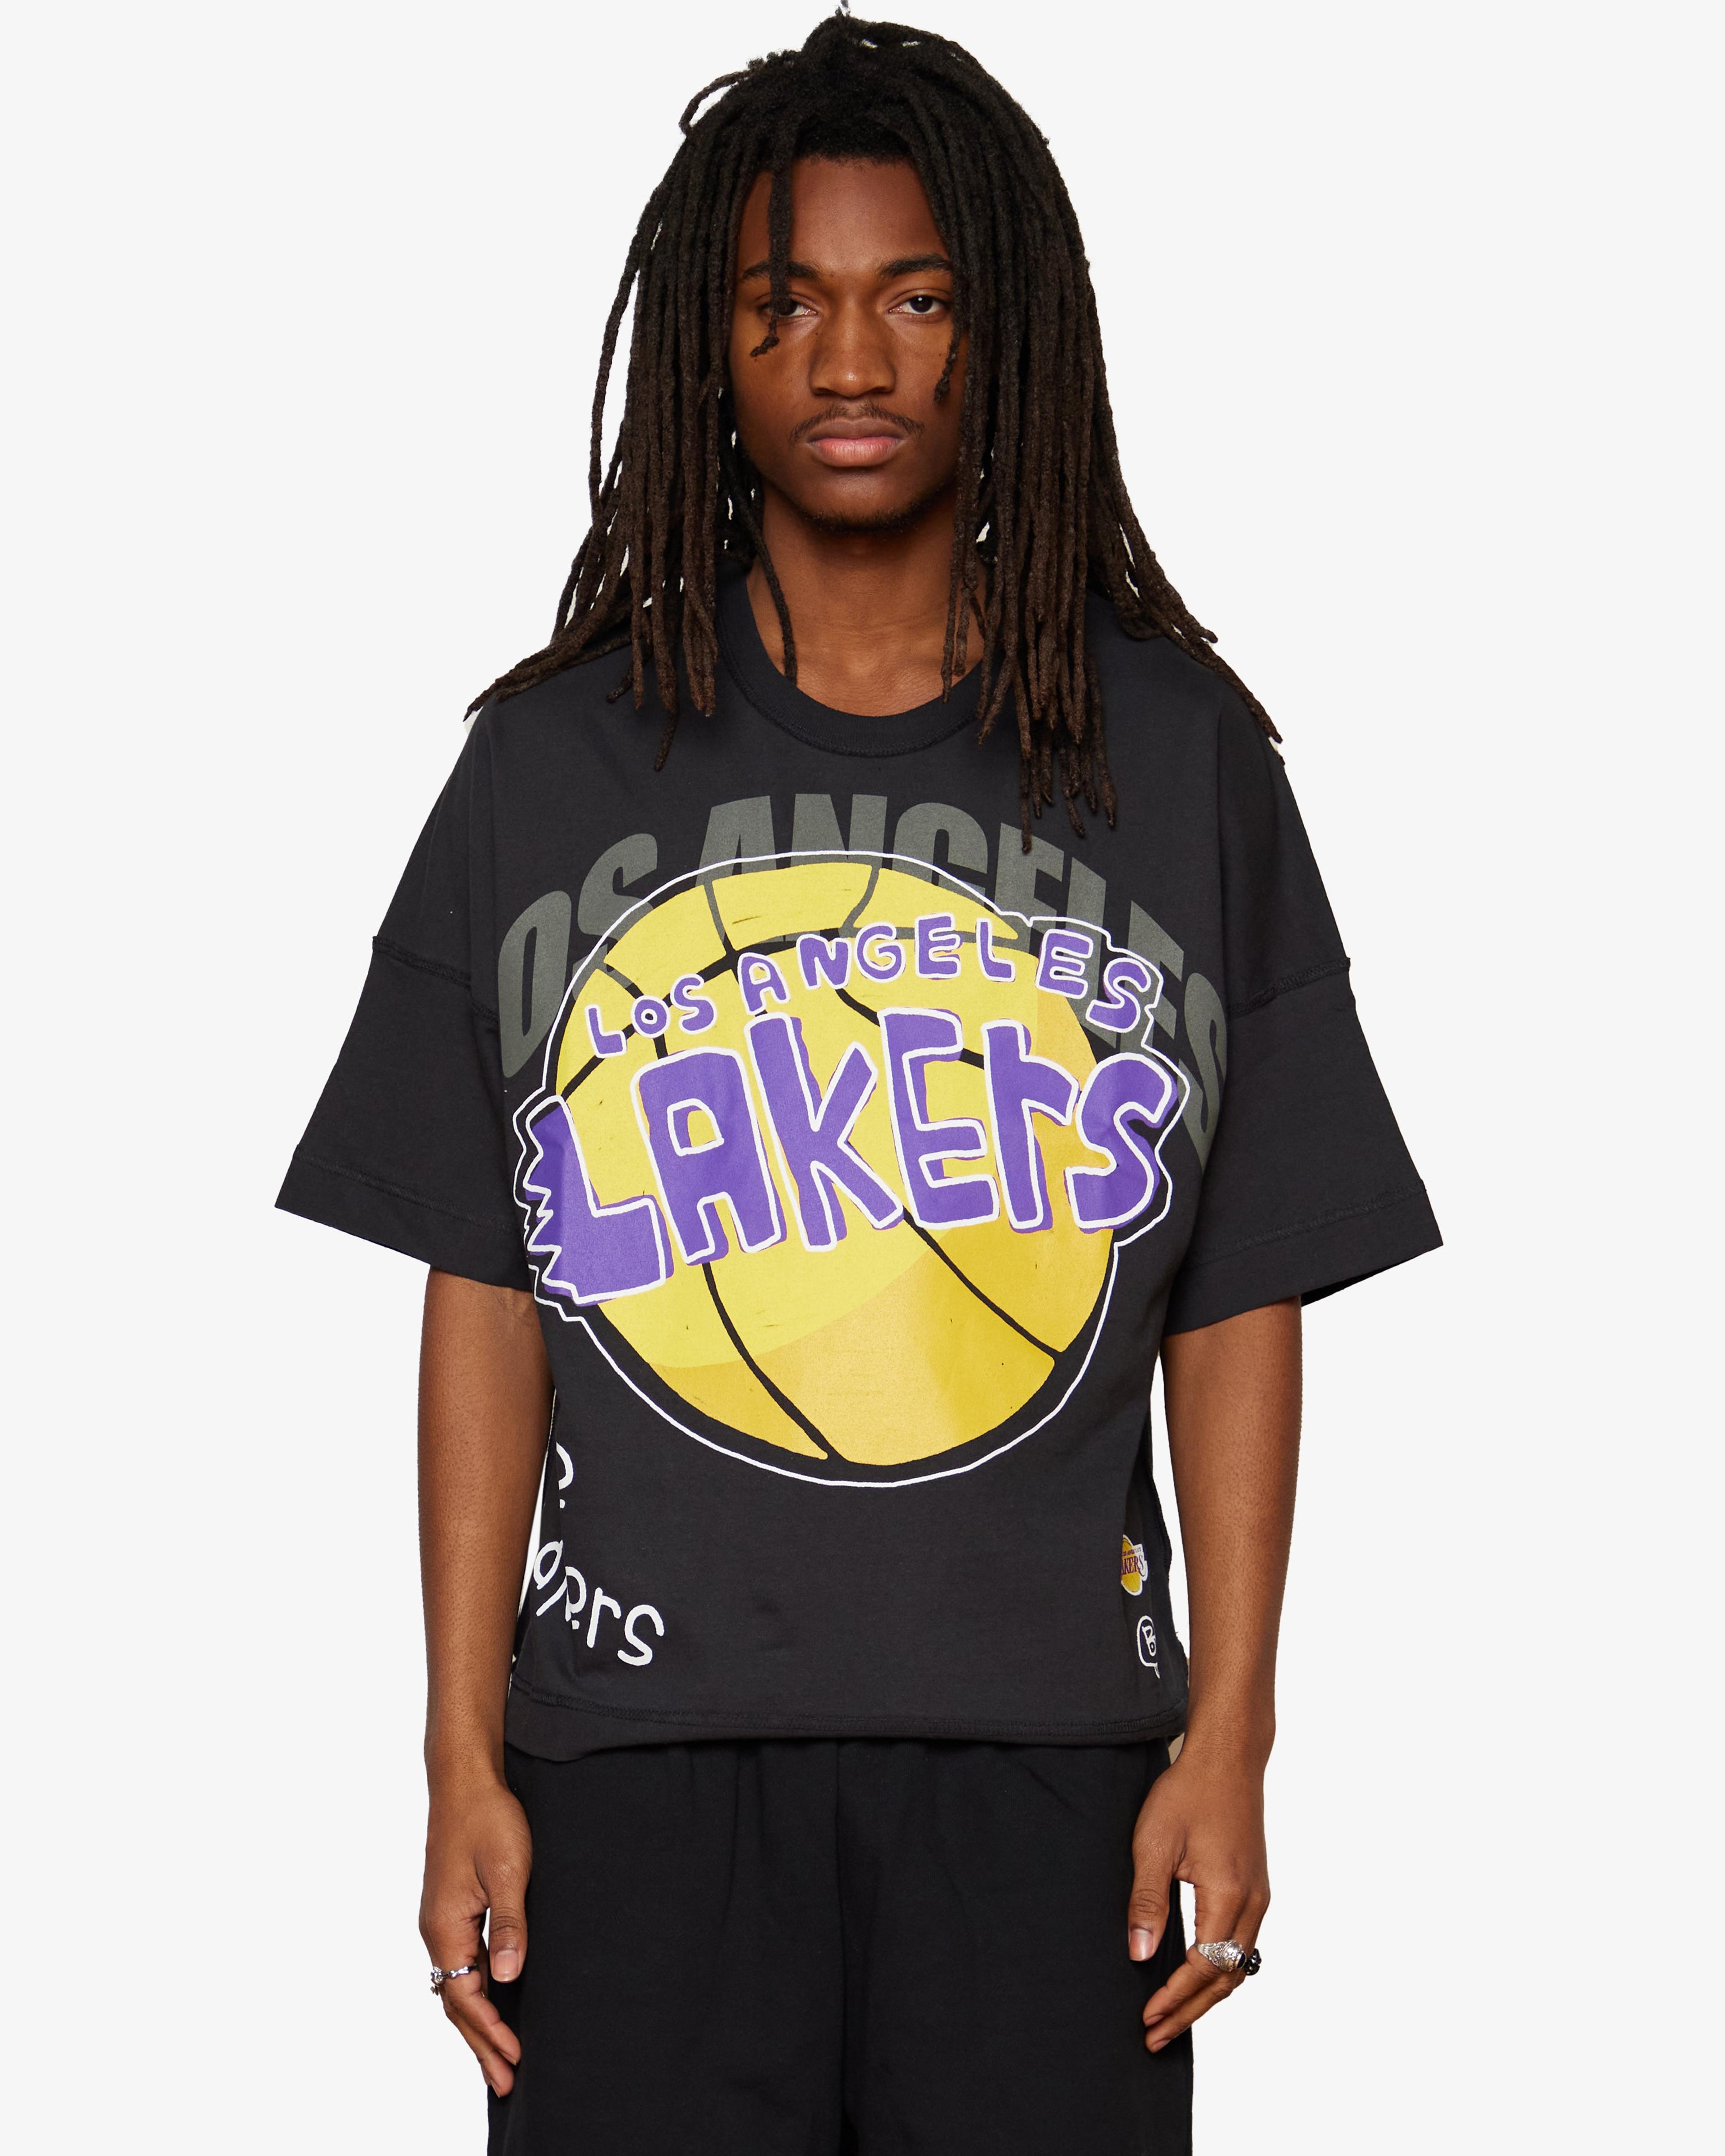 Alternate View 3 of B2SS Los Angeles Lakers NBA Tee